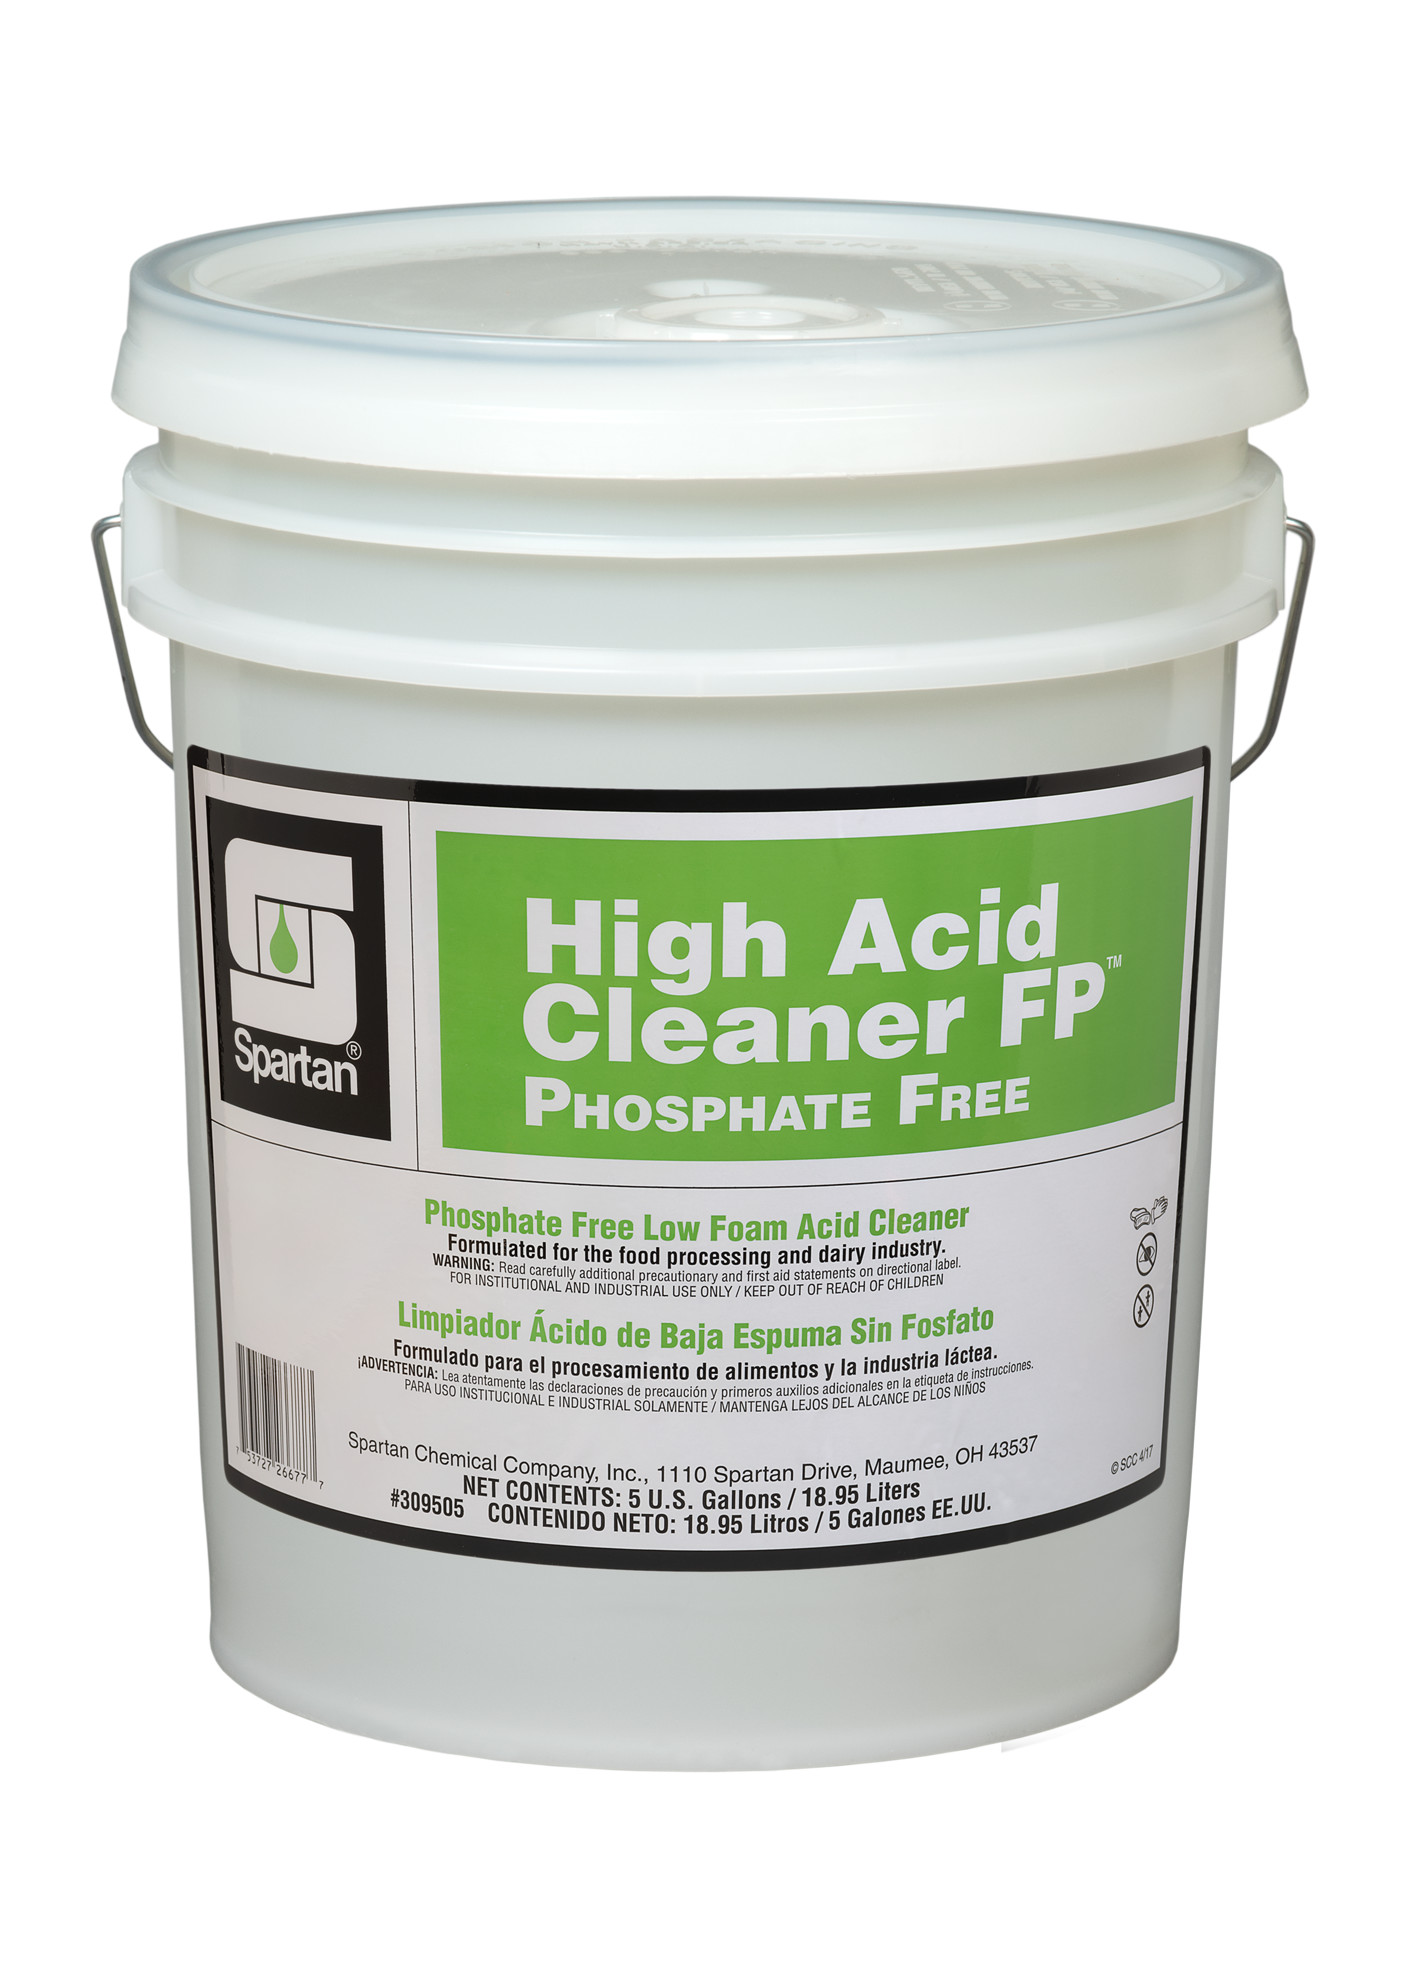 Spartan Chemical Company High Acid Cleaner FP Phosphate Free, 5 GAL PAIL